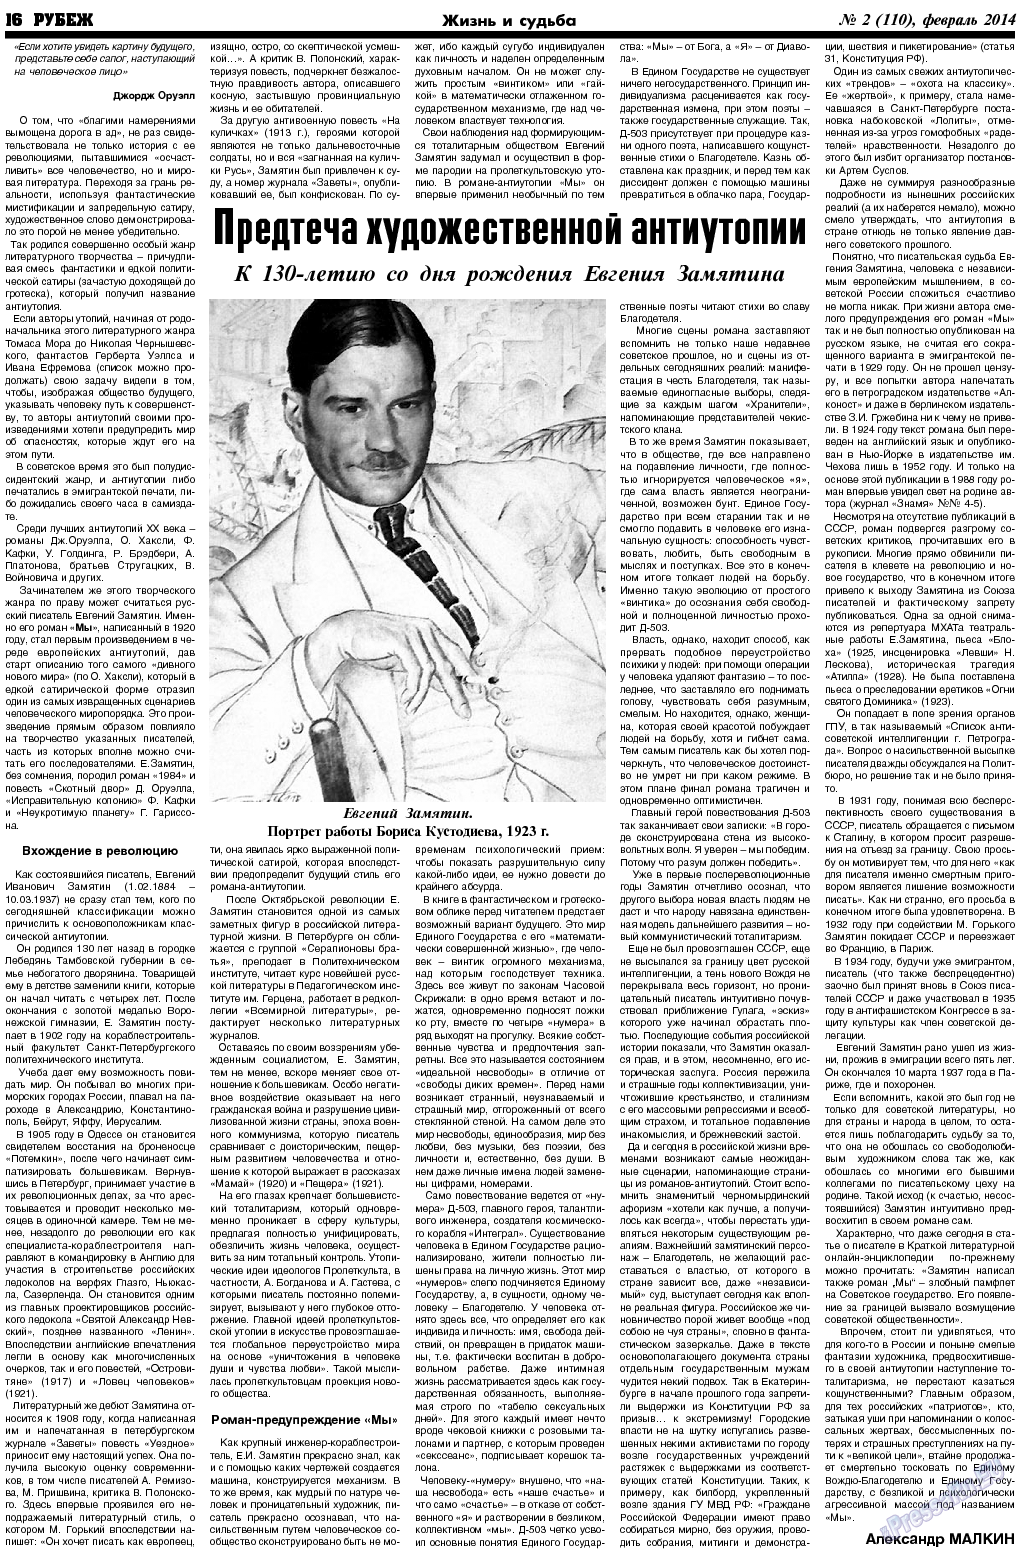 Рубеж, газета. 2014 №2 стр.16